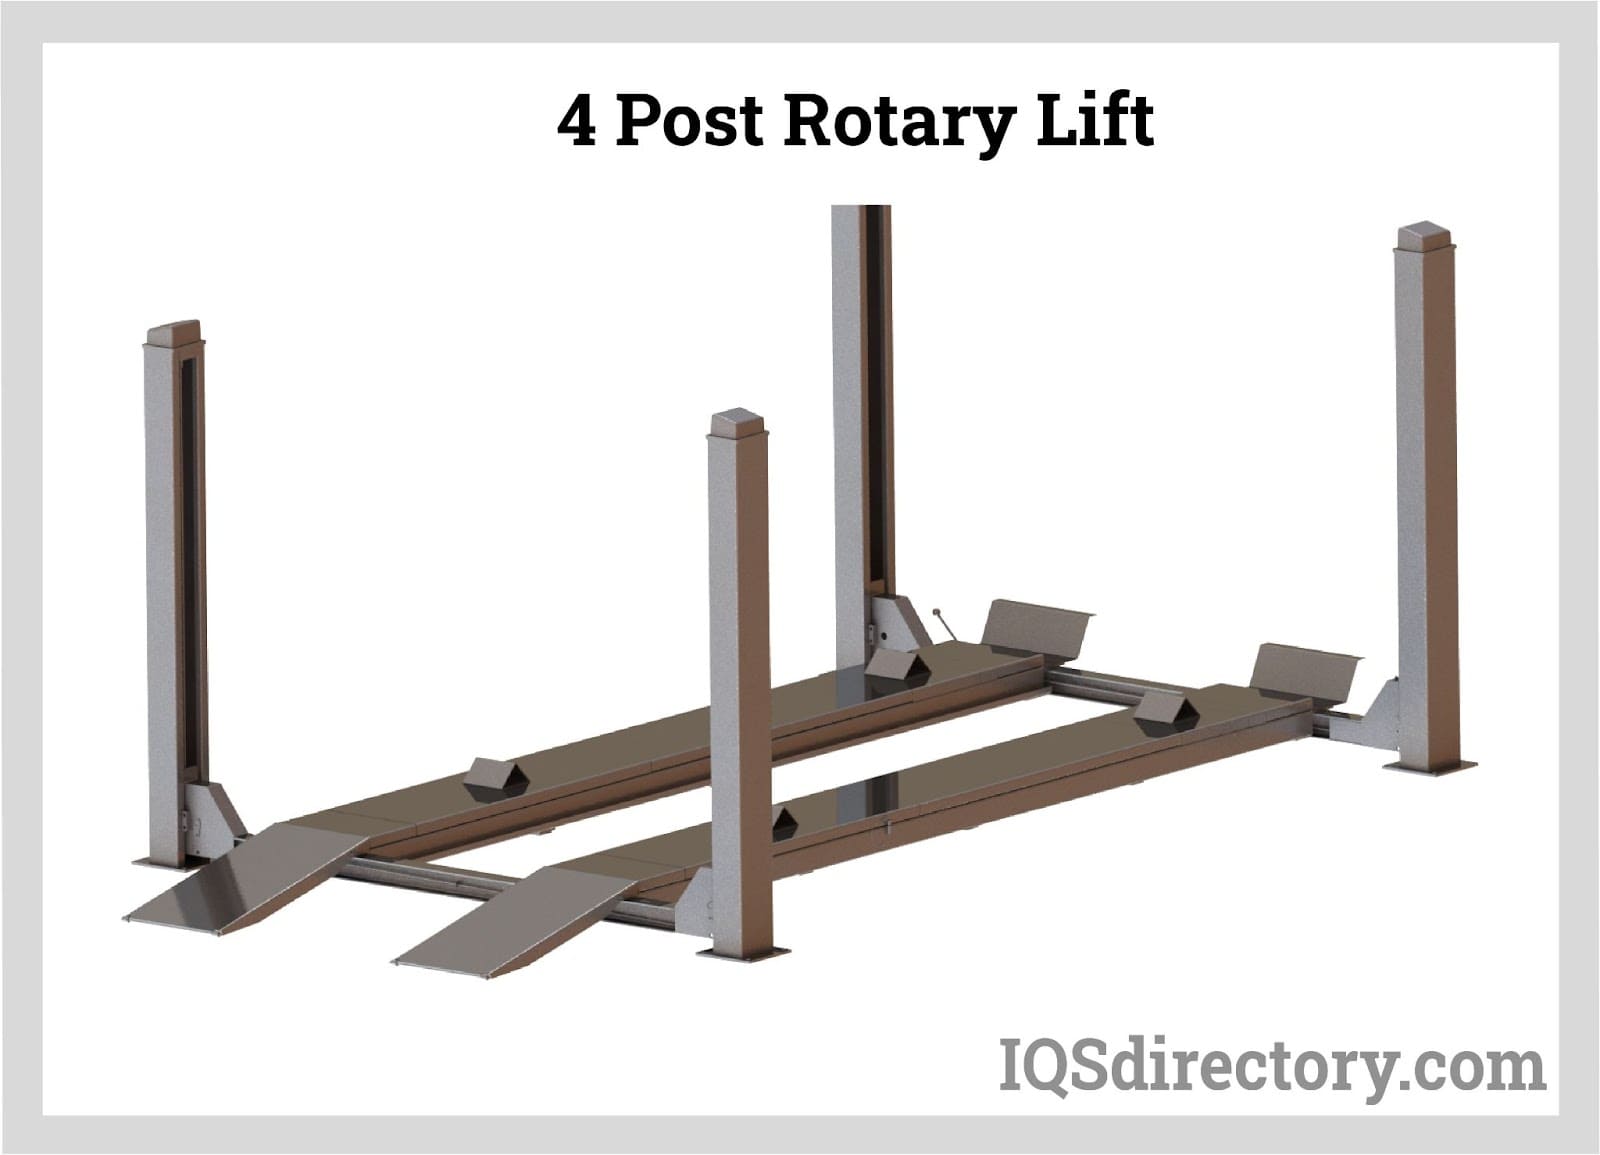 4 Post Rotary Lift